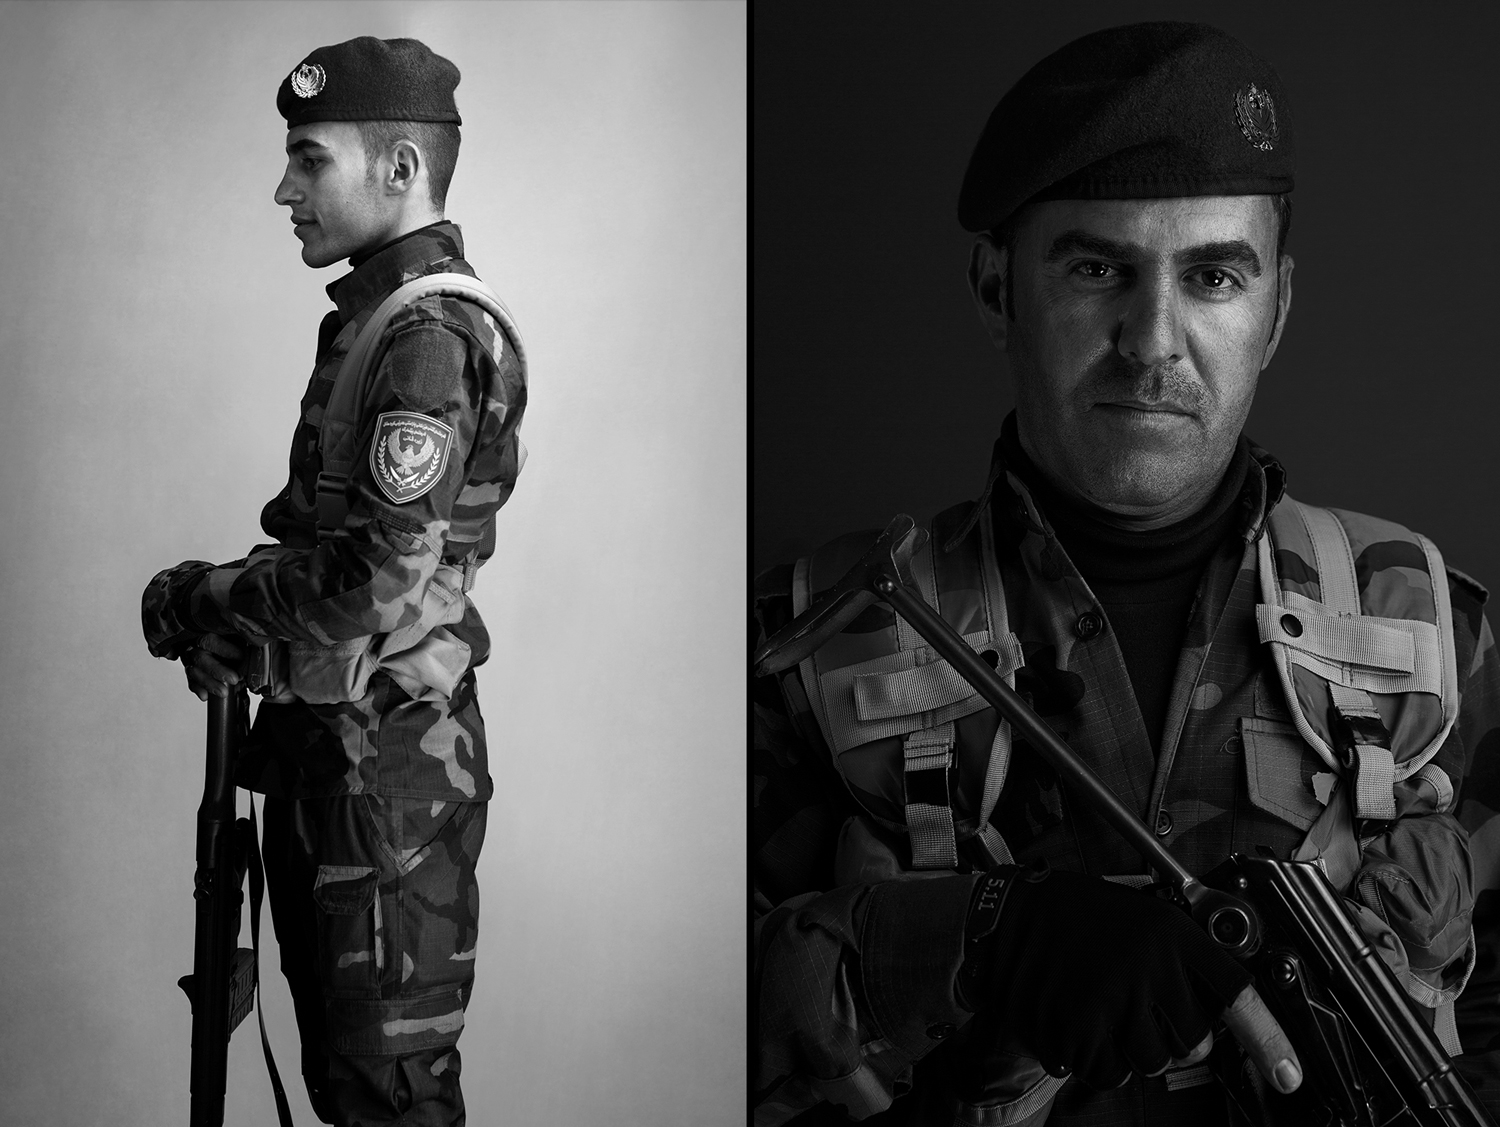 Portraits of two Peshmerga soldiers